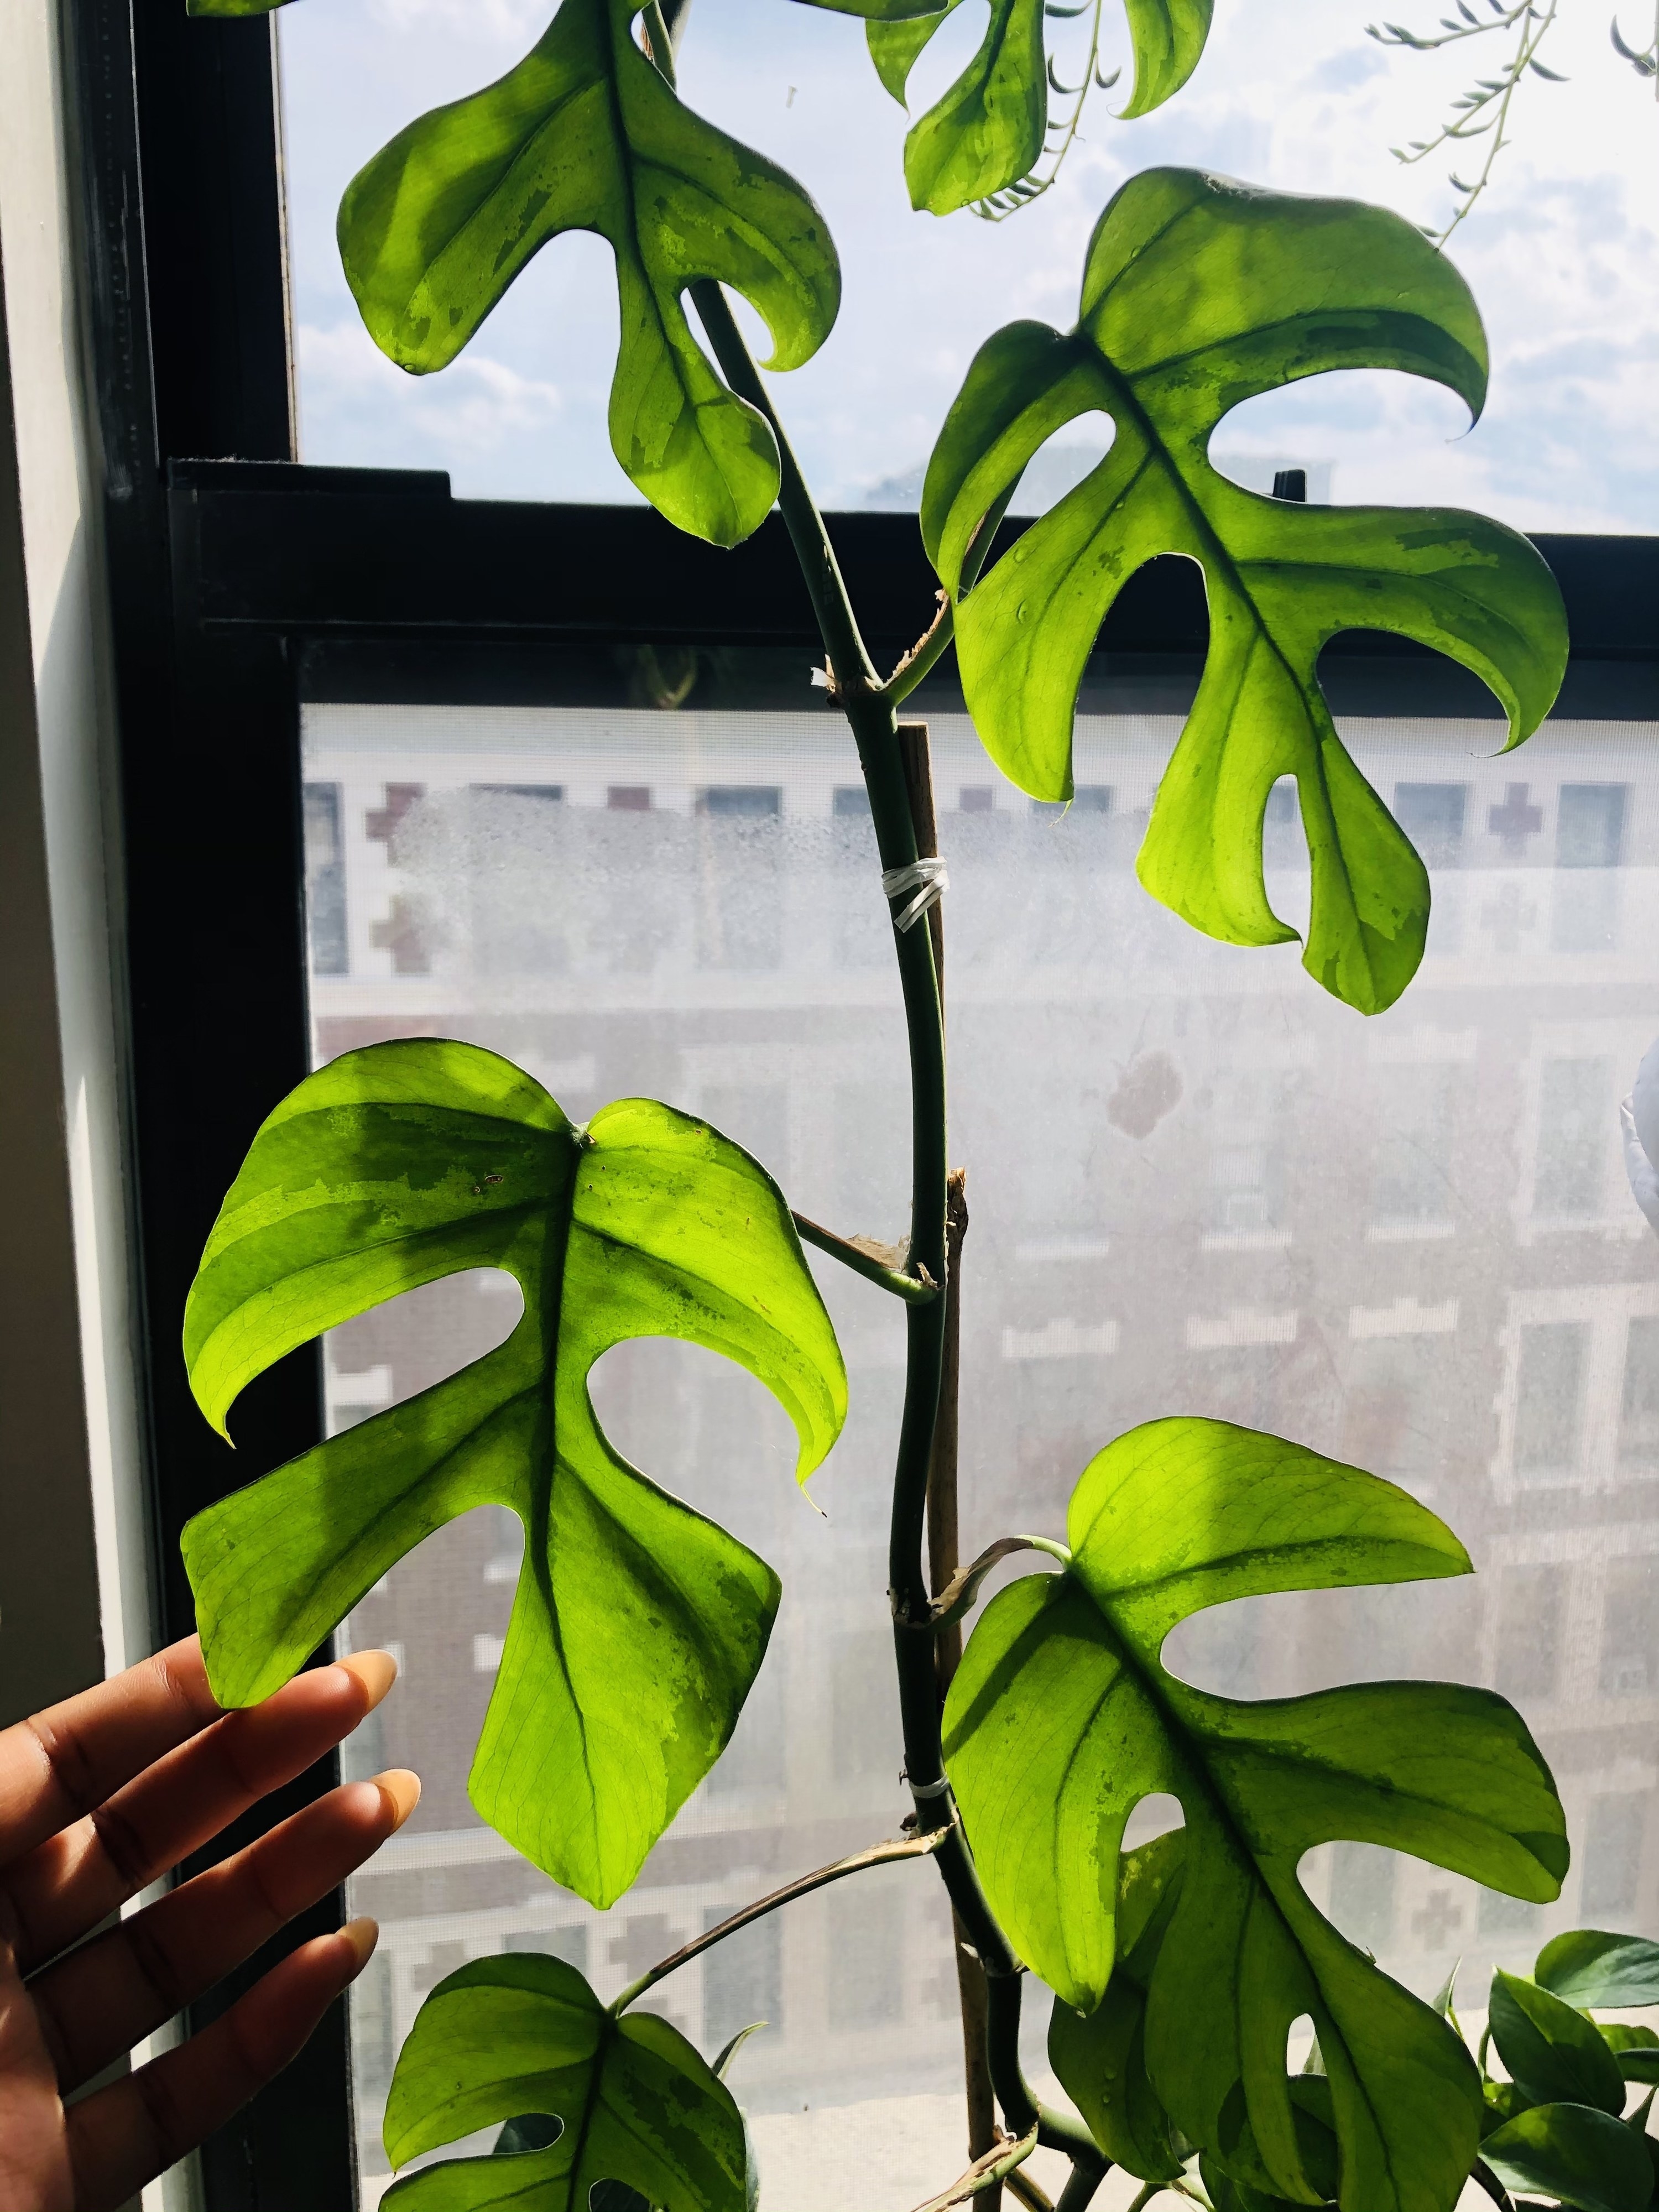 buzzfeed writers mini monstera plant in a windowsill 